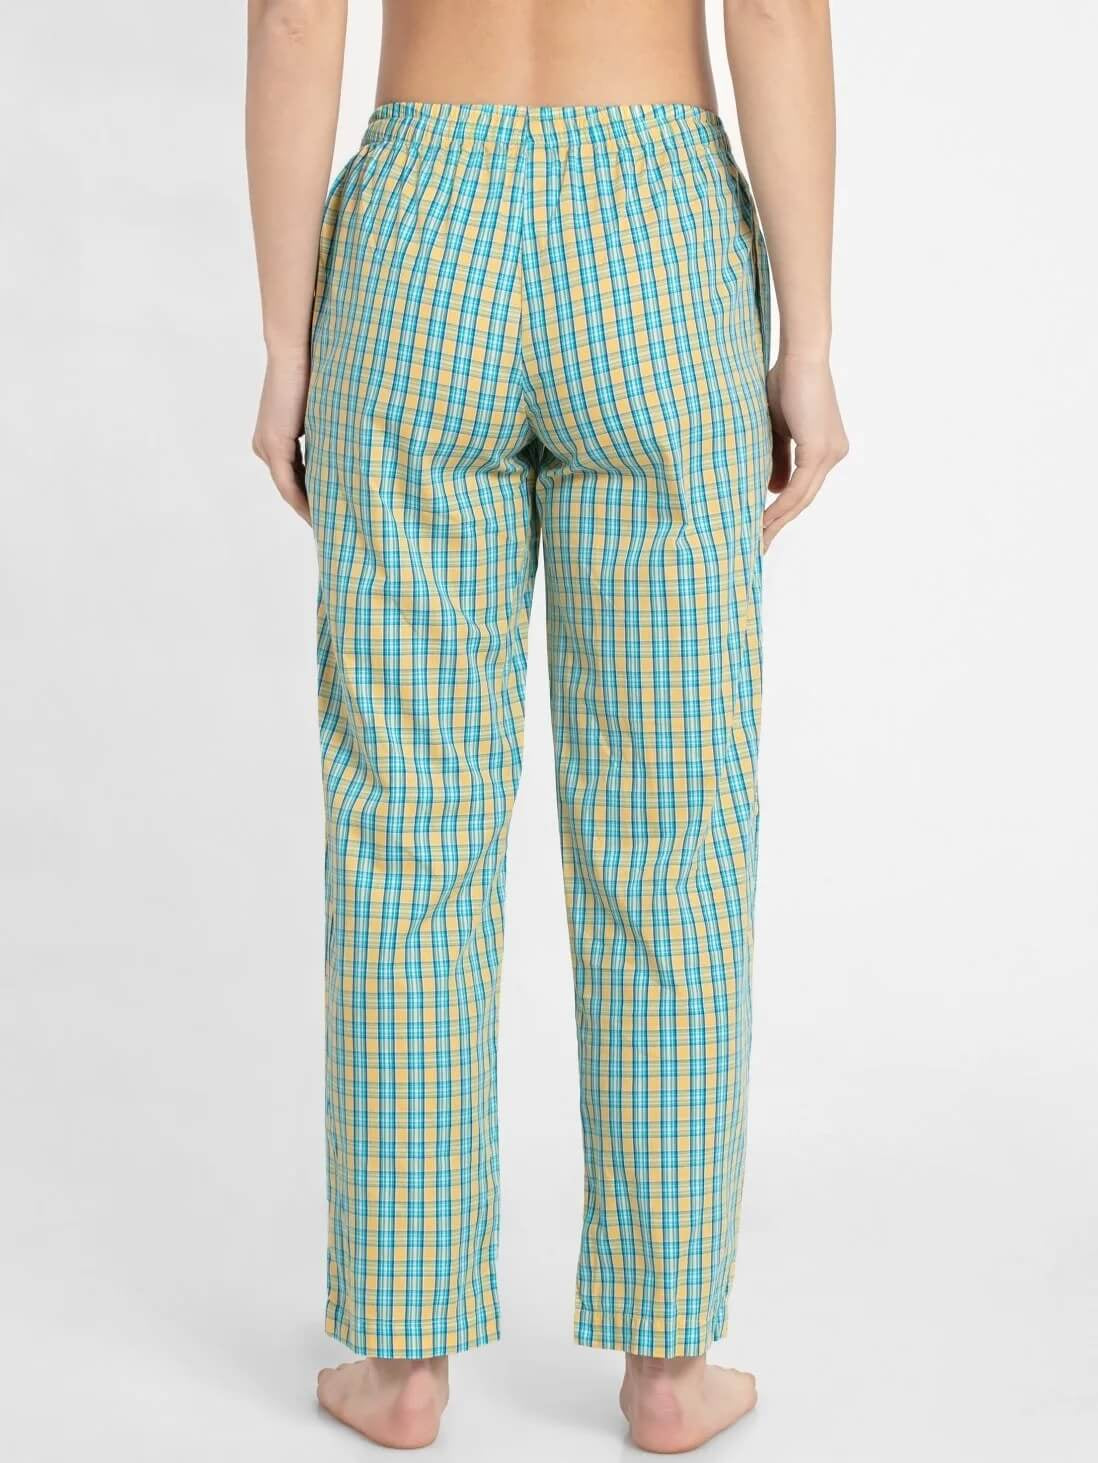 Hanes Men's Woven Pajama Pant at Amazon Men's Clothing store